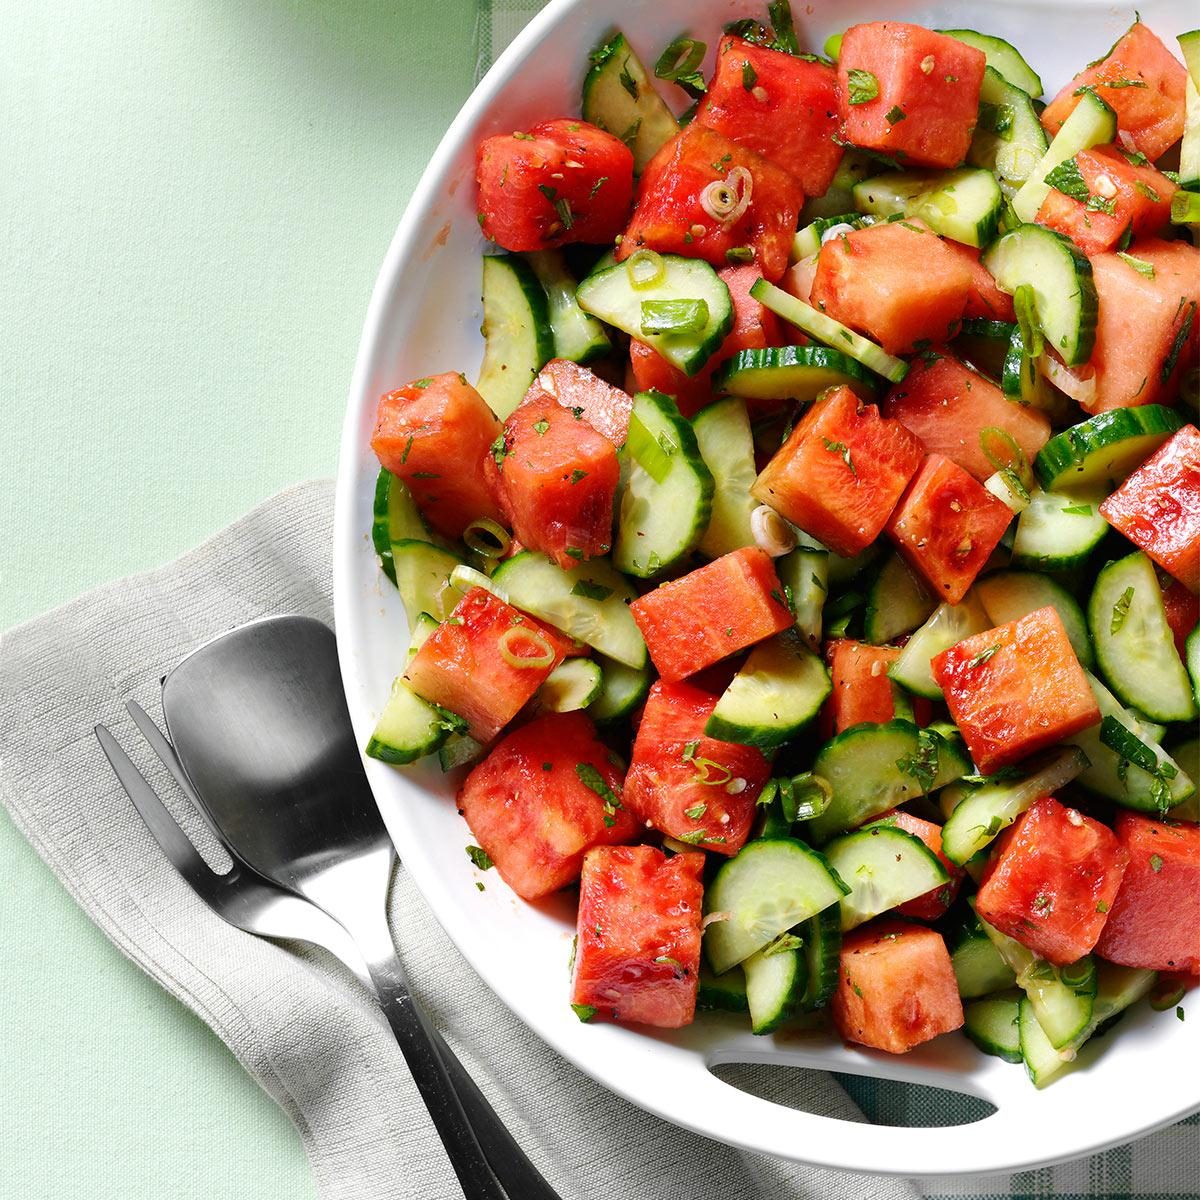 Inspired by: Watermelon Feta Salad